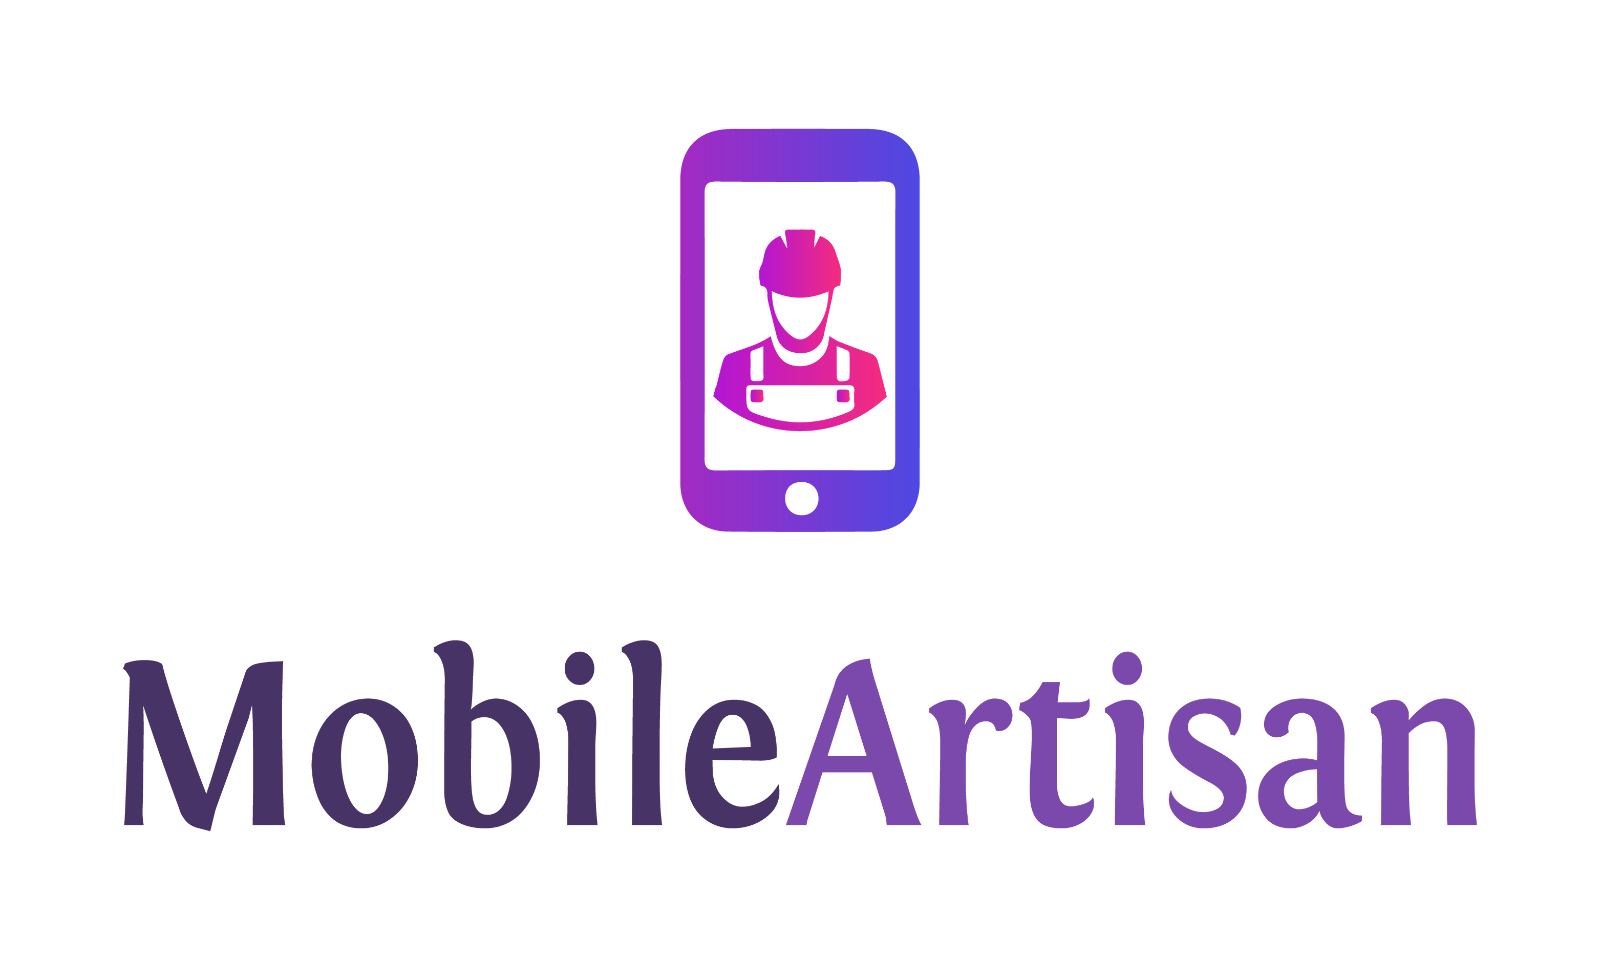 MobileArtisan.com - Creative brandable domain for sale